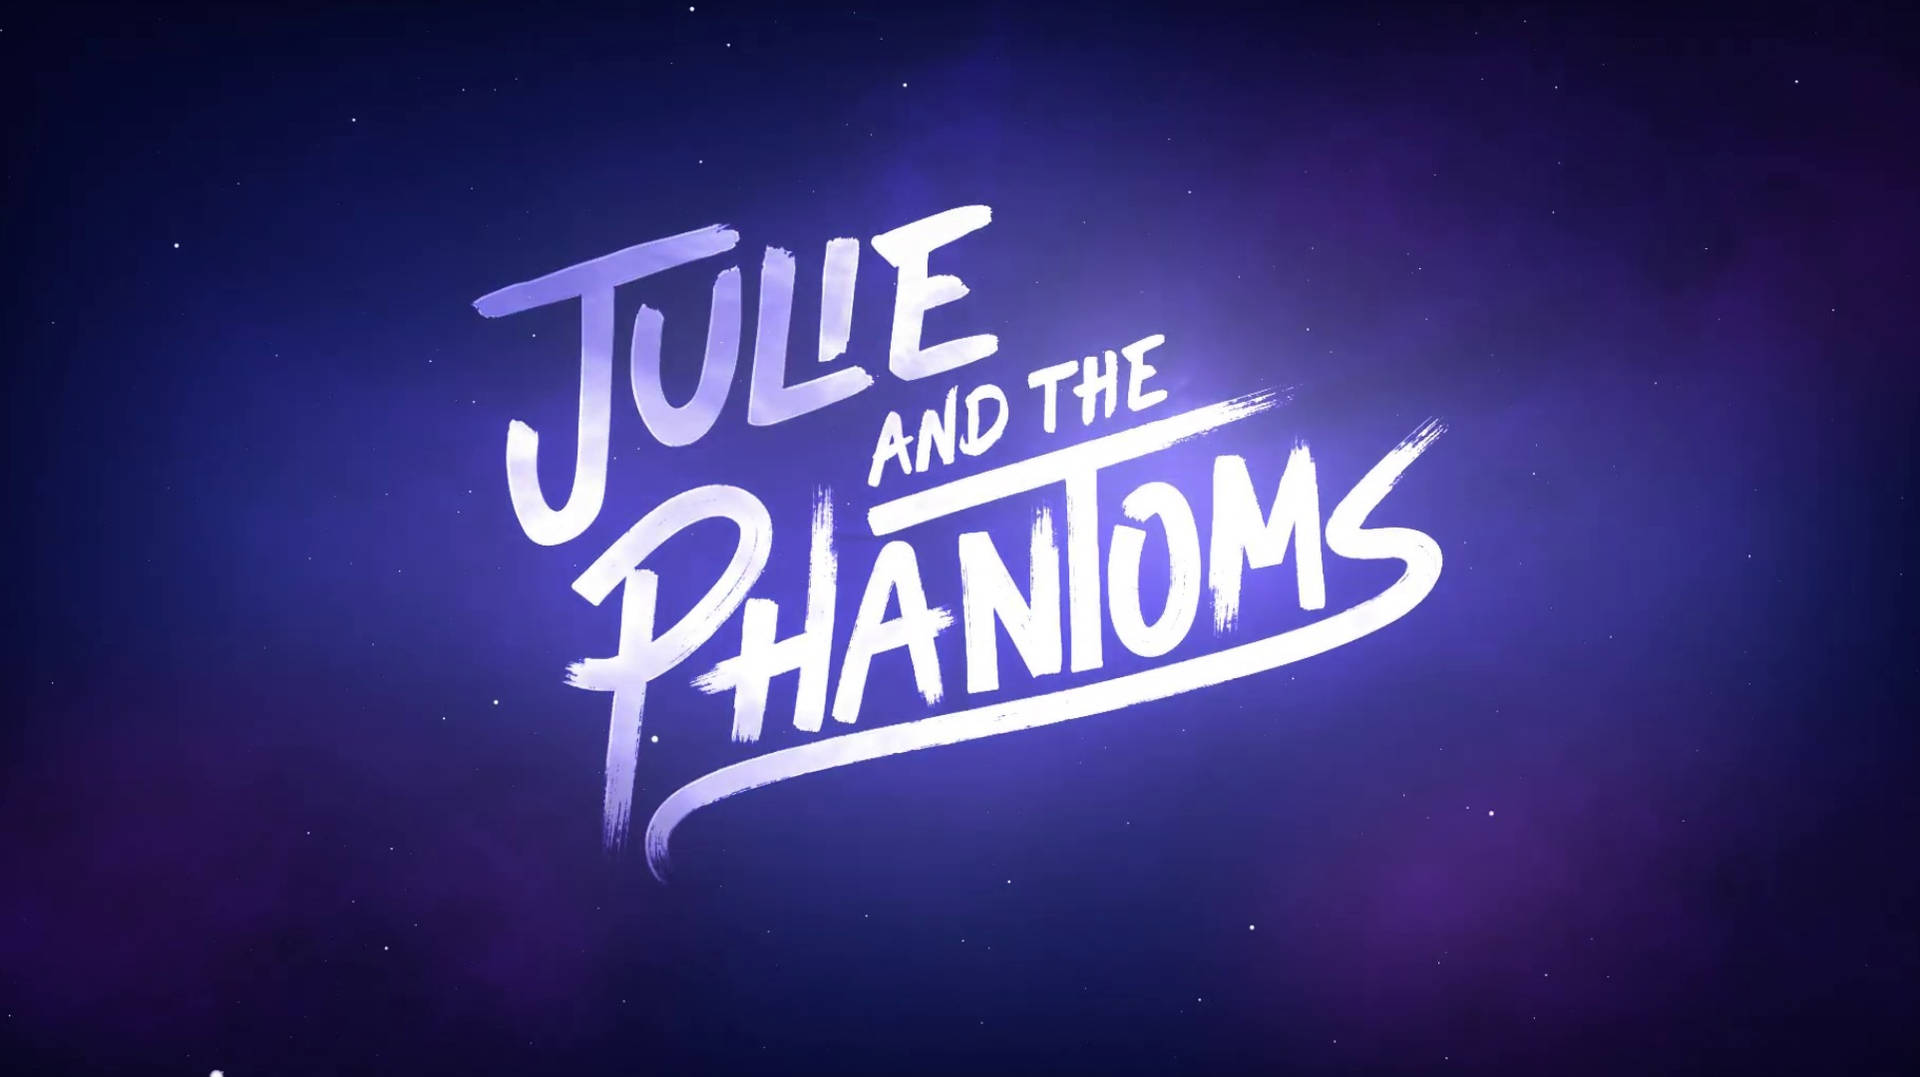 julie and the Phantoms wallpaper by LuluCreepypasta  Download on ZEDGE   d521